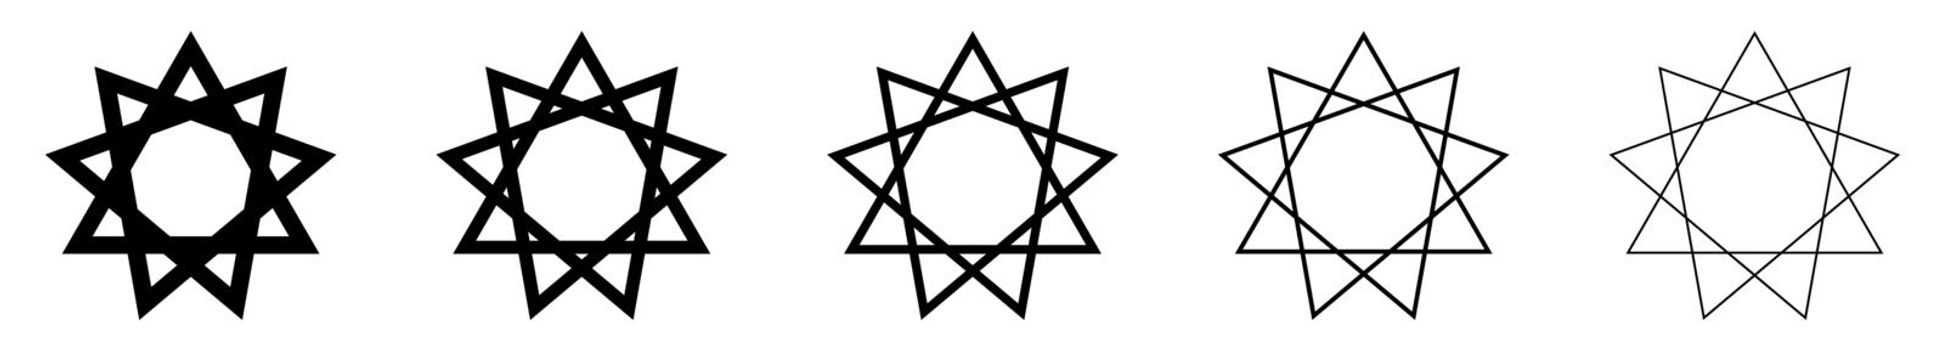 Bahai star. Black linear Baha'i symbols set. Religious symbol of Bahaism.